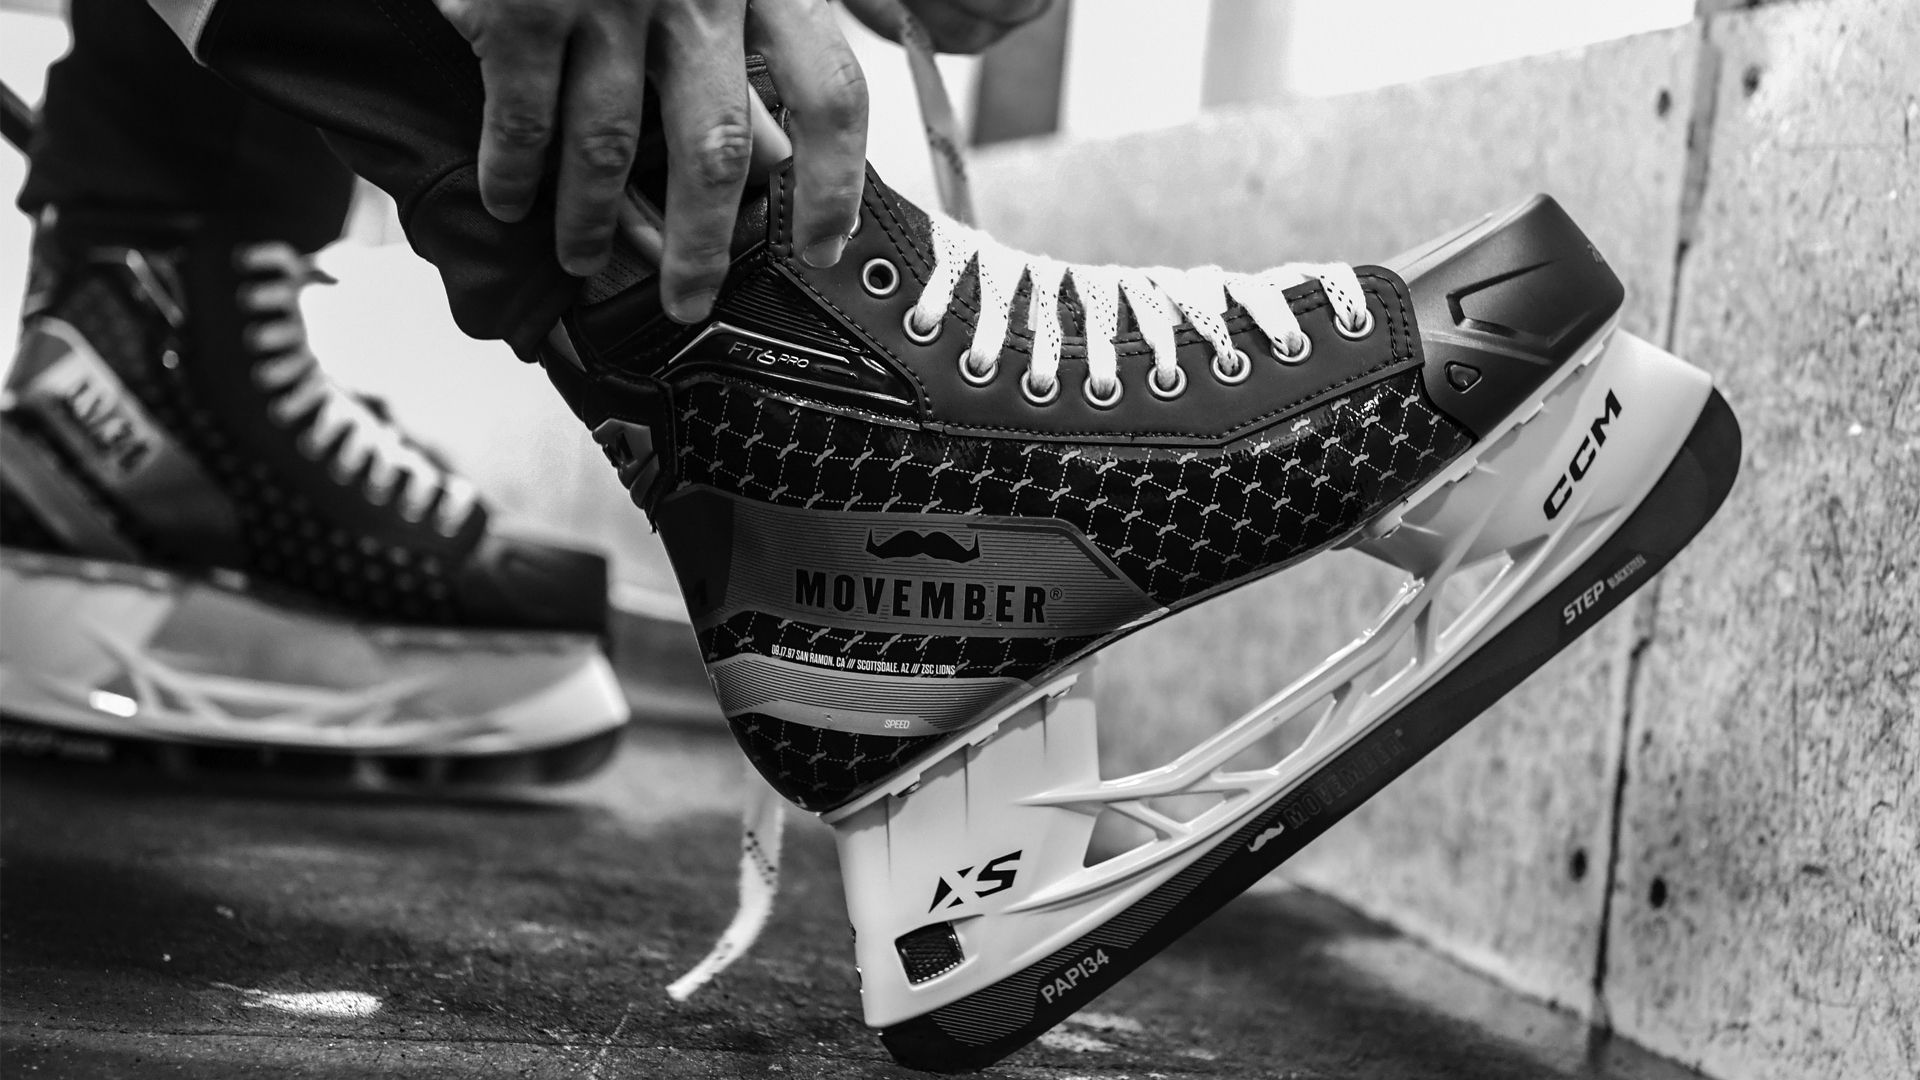 An image of Auston Matthews' CCM x Movember hockey skates